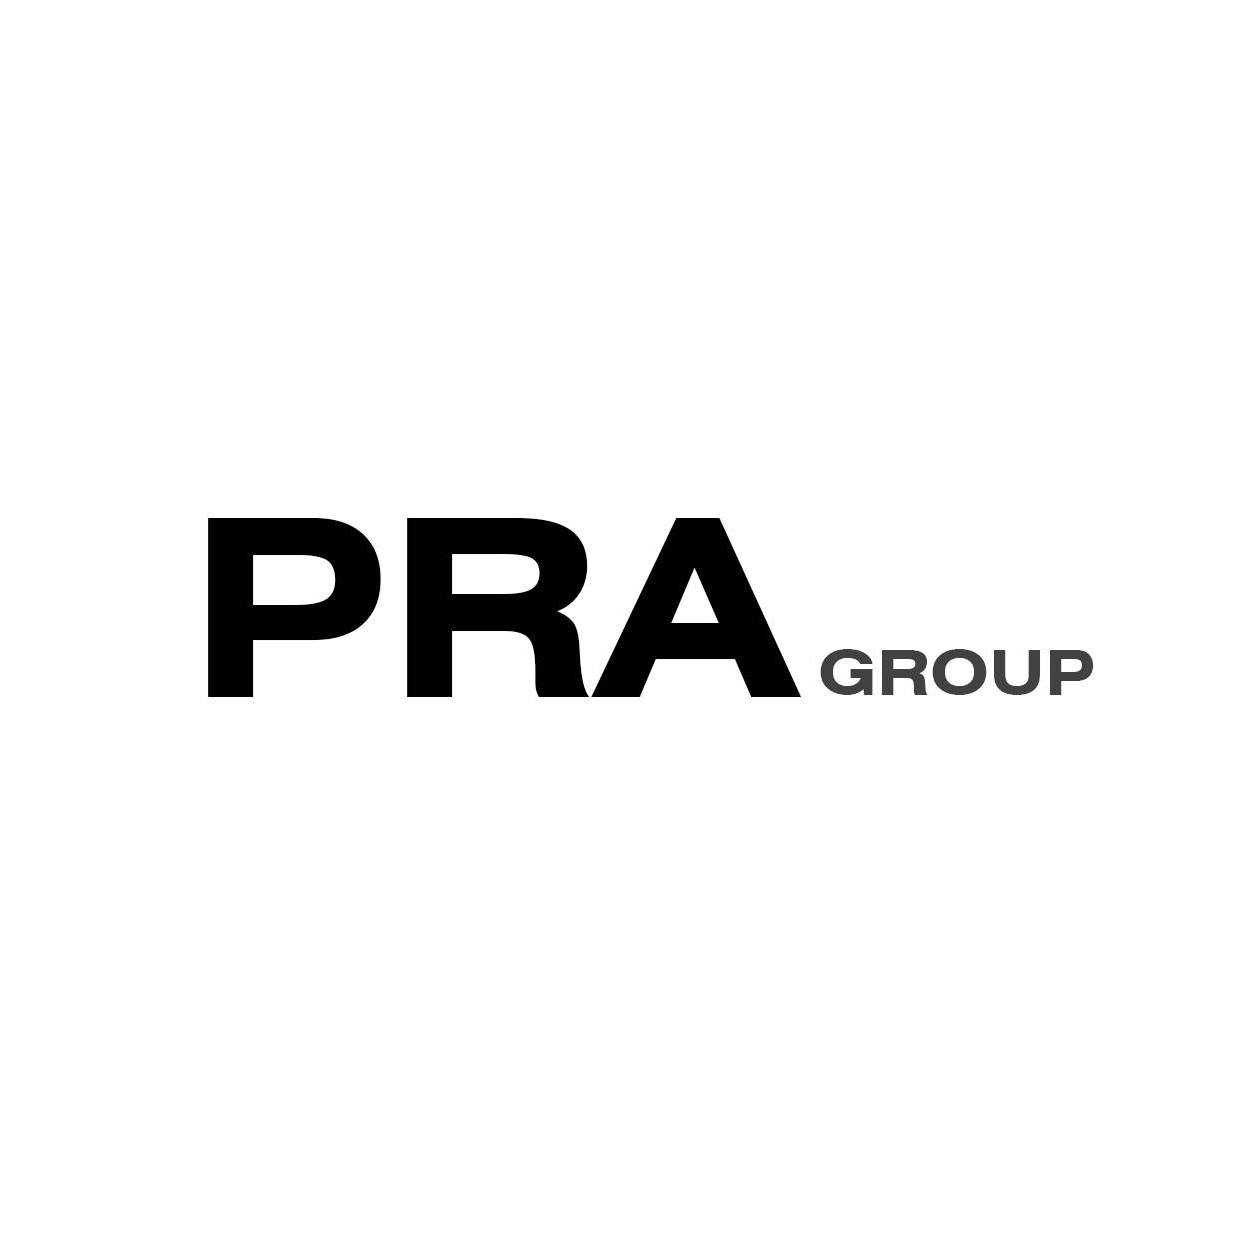 PRA GROUP|Architect|Professional Services